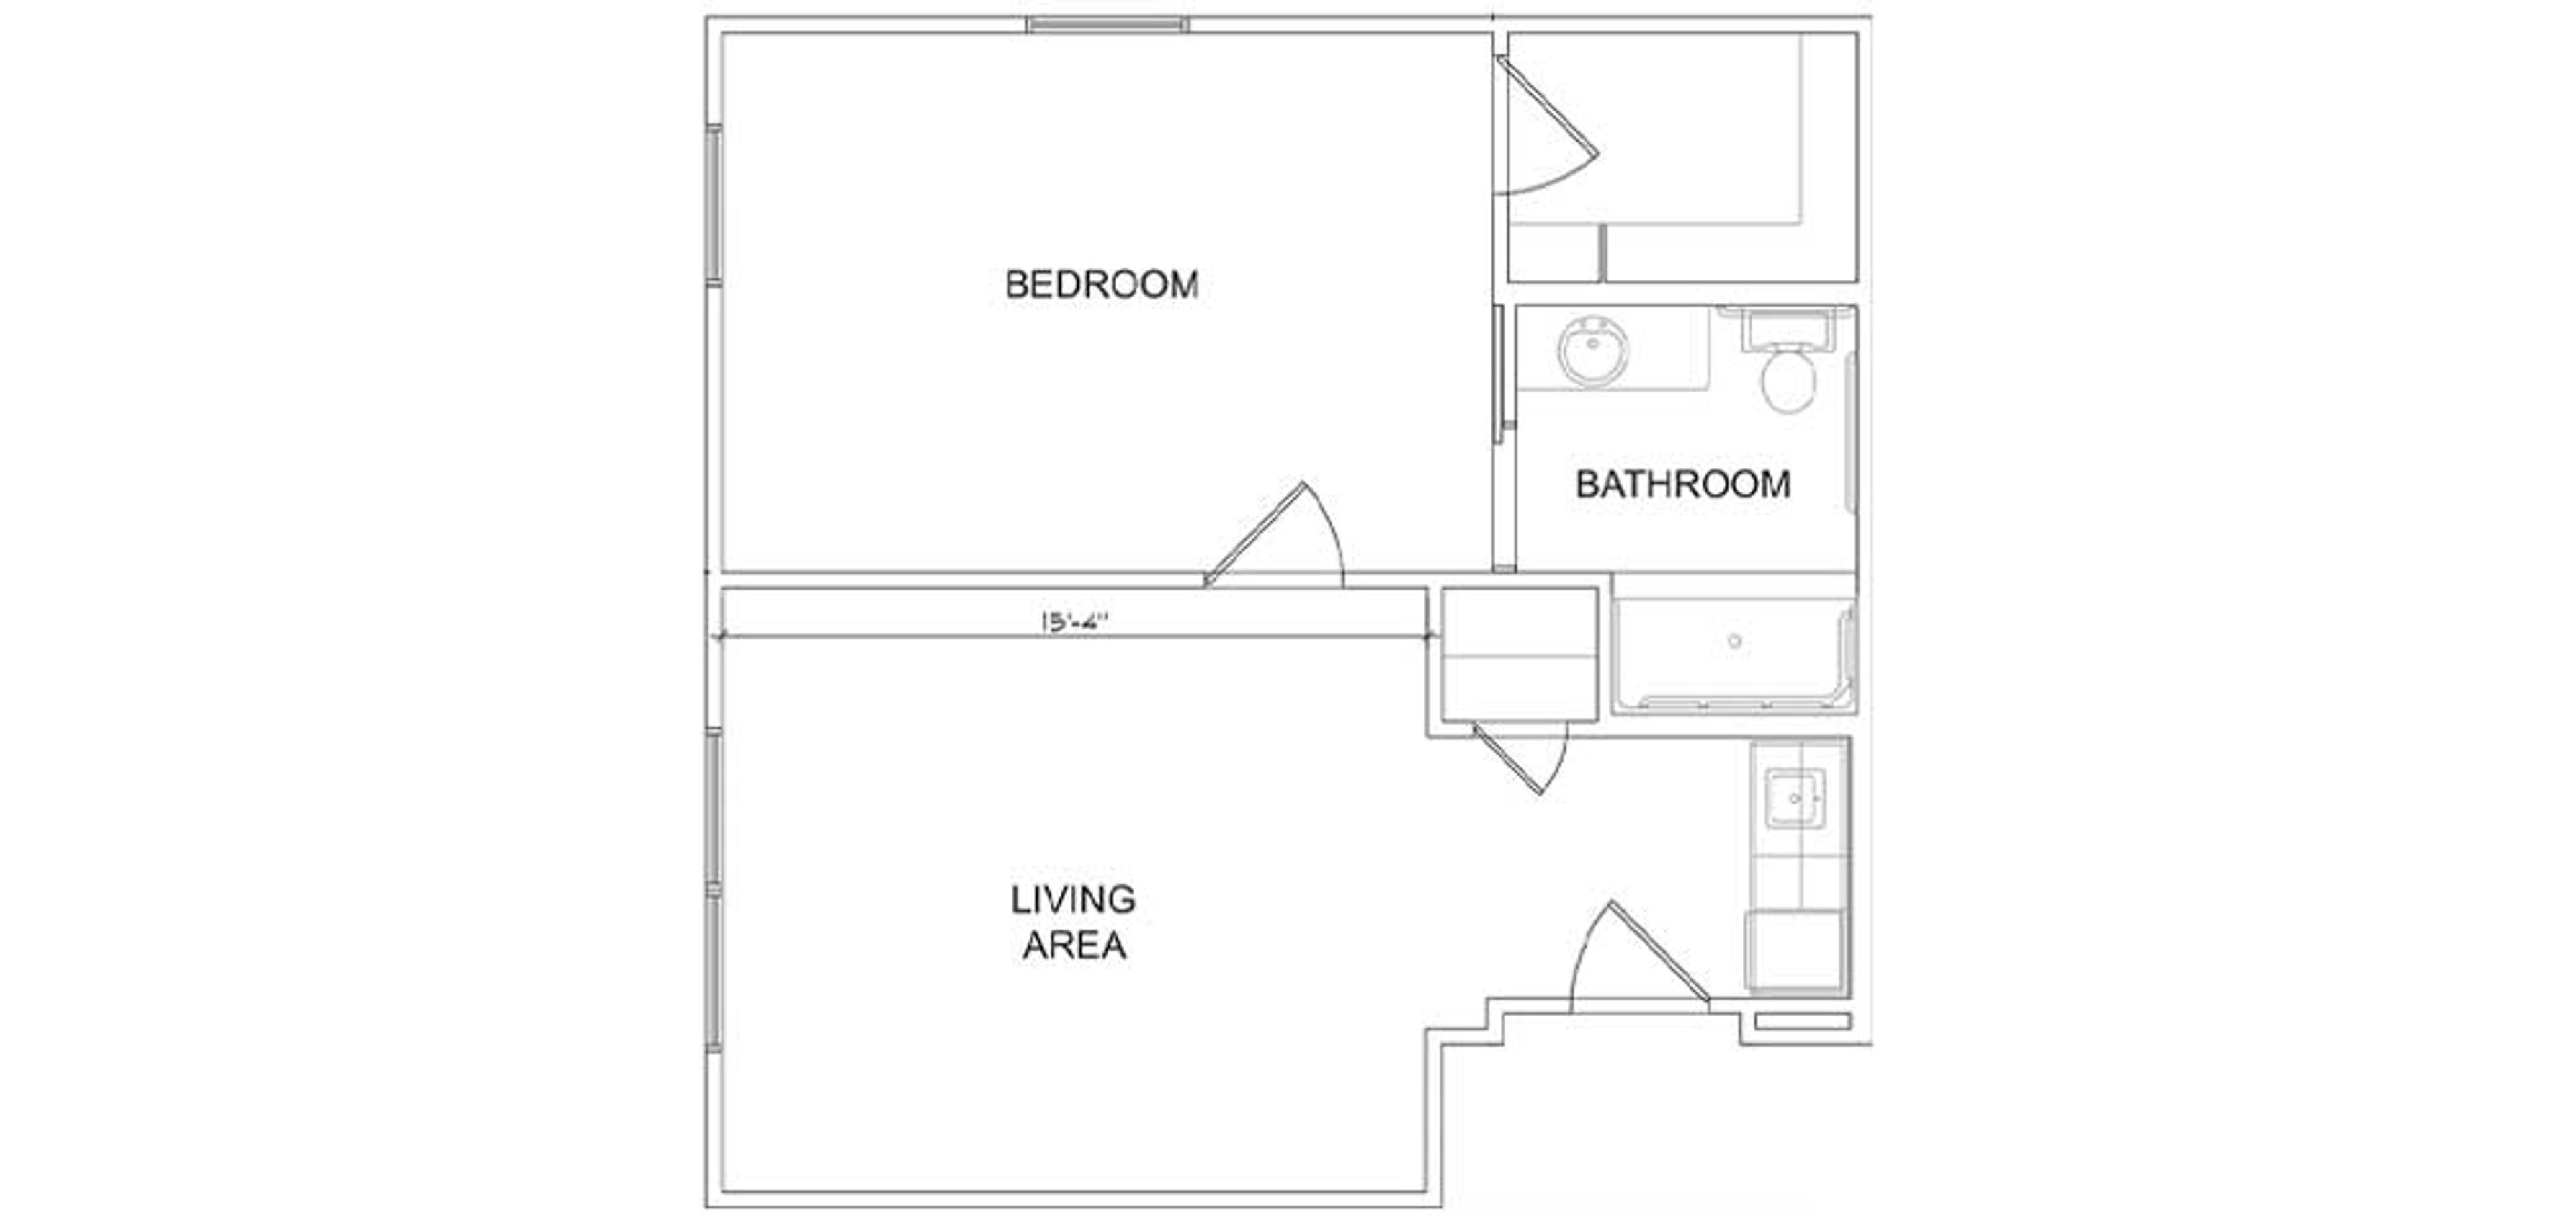 Floorplan - Santa Fe Trails - 1 bed, 1 bath, Luxury Assisted Living